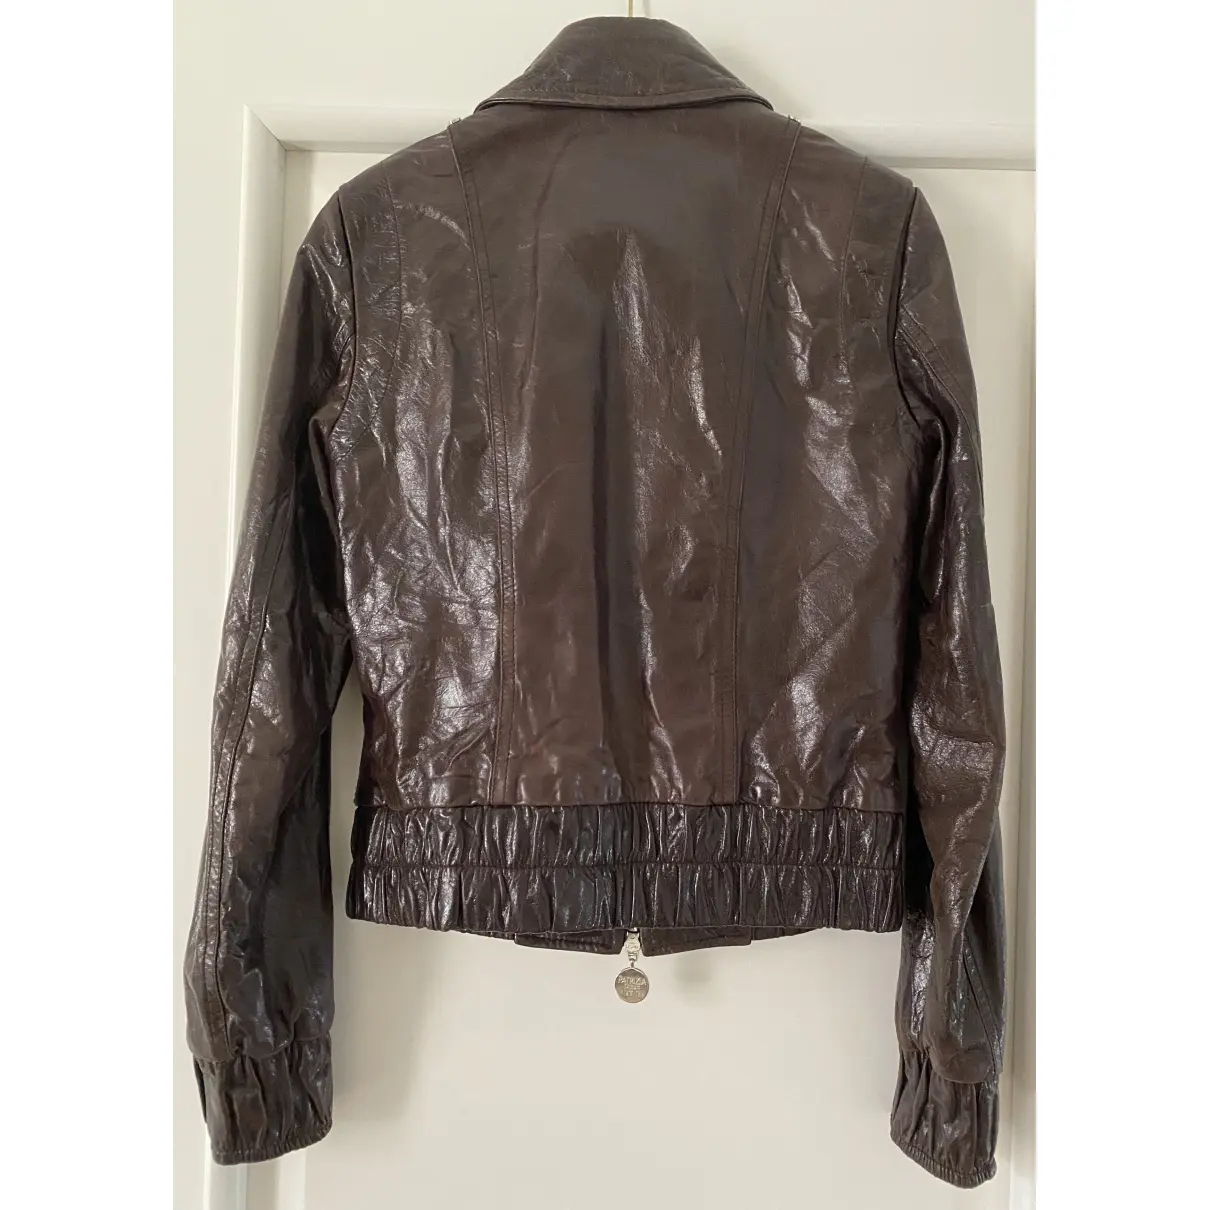 Buy Patrizia Pepe Leather biker jacket online